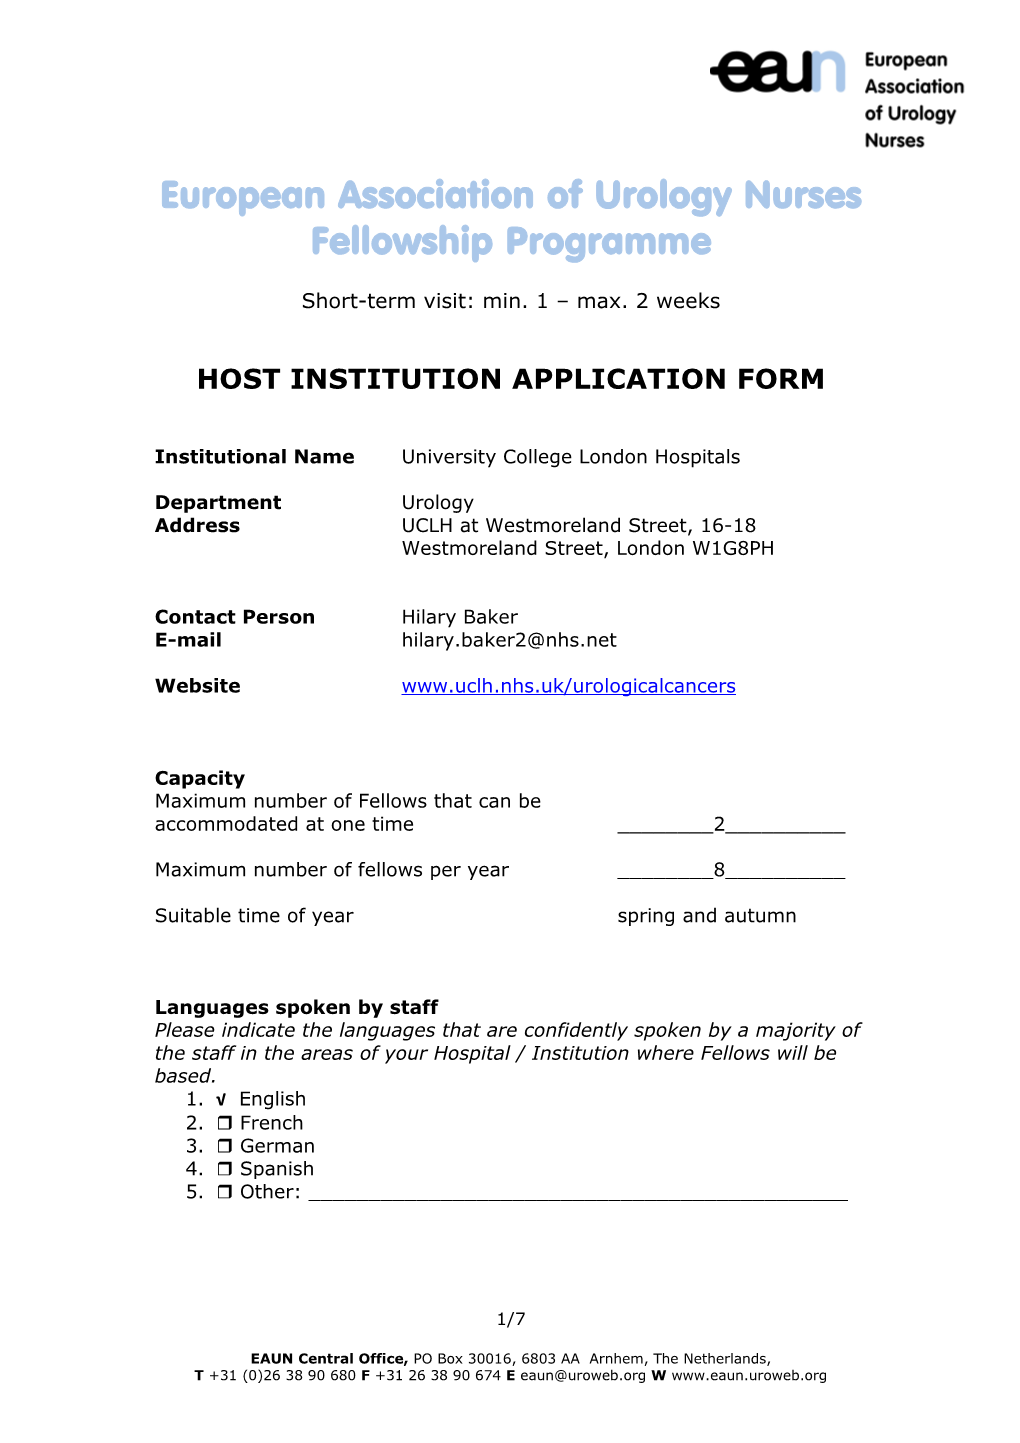 European Association of Urology Nurses Fellowship Programme